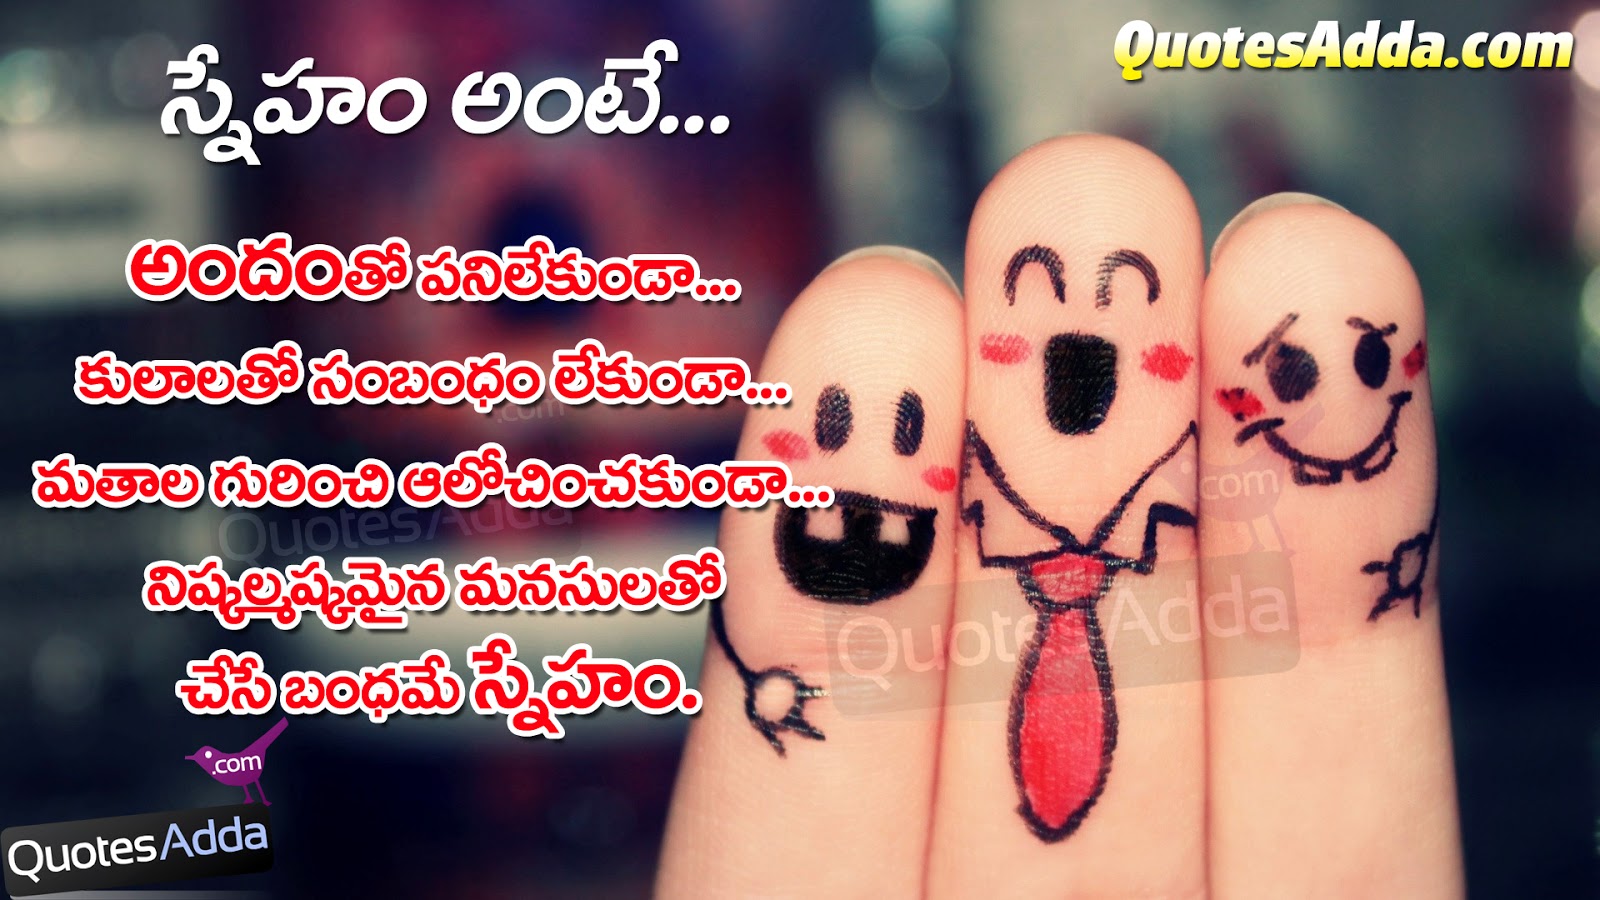 68615573 Best Telugu Friendship Meaning Quotations Images JUL16 QuotesAdda com